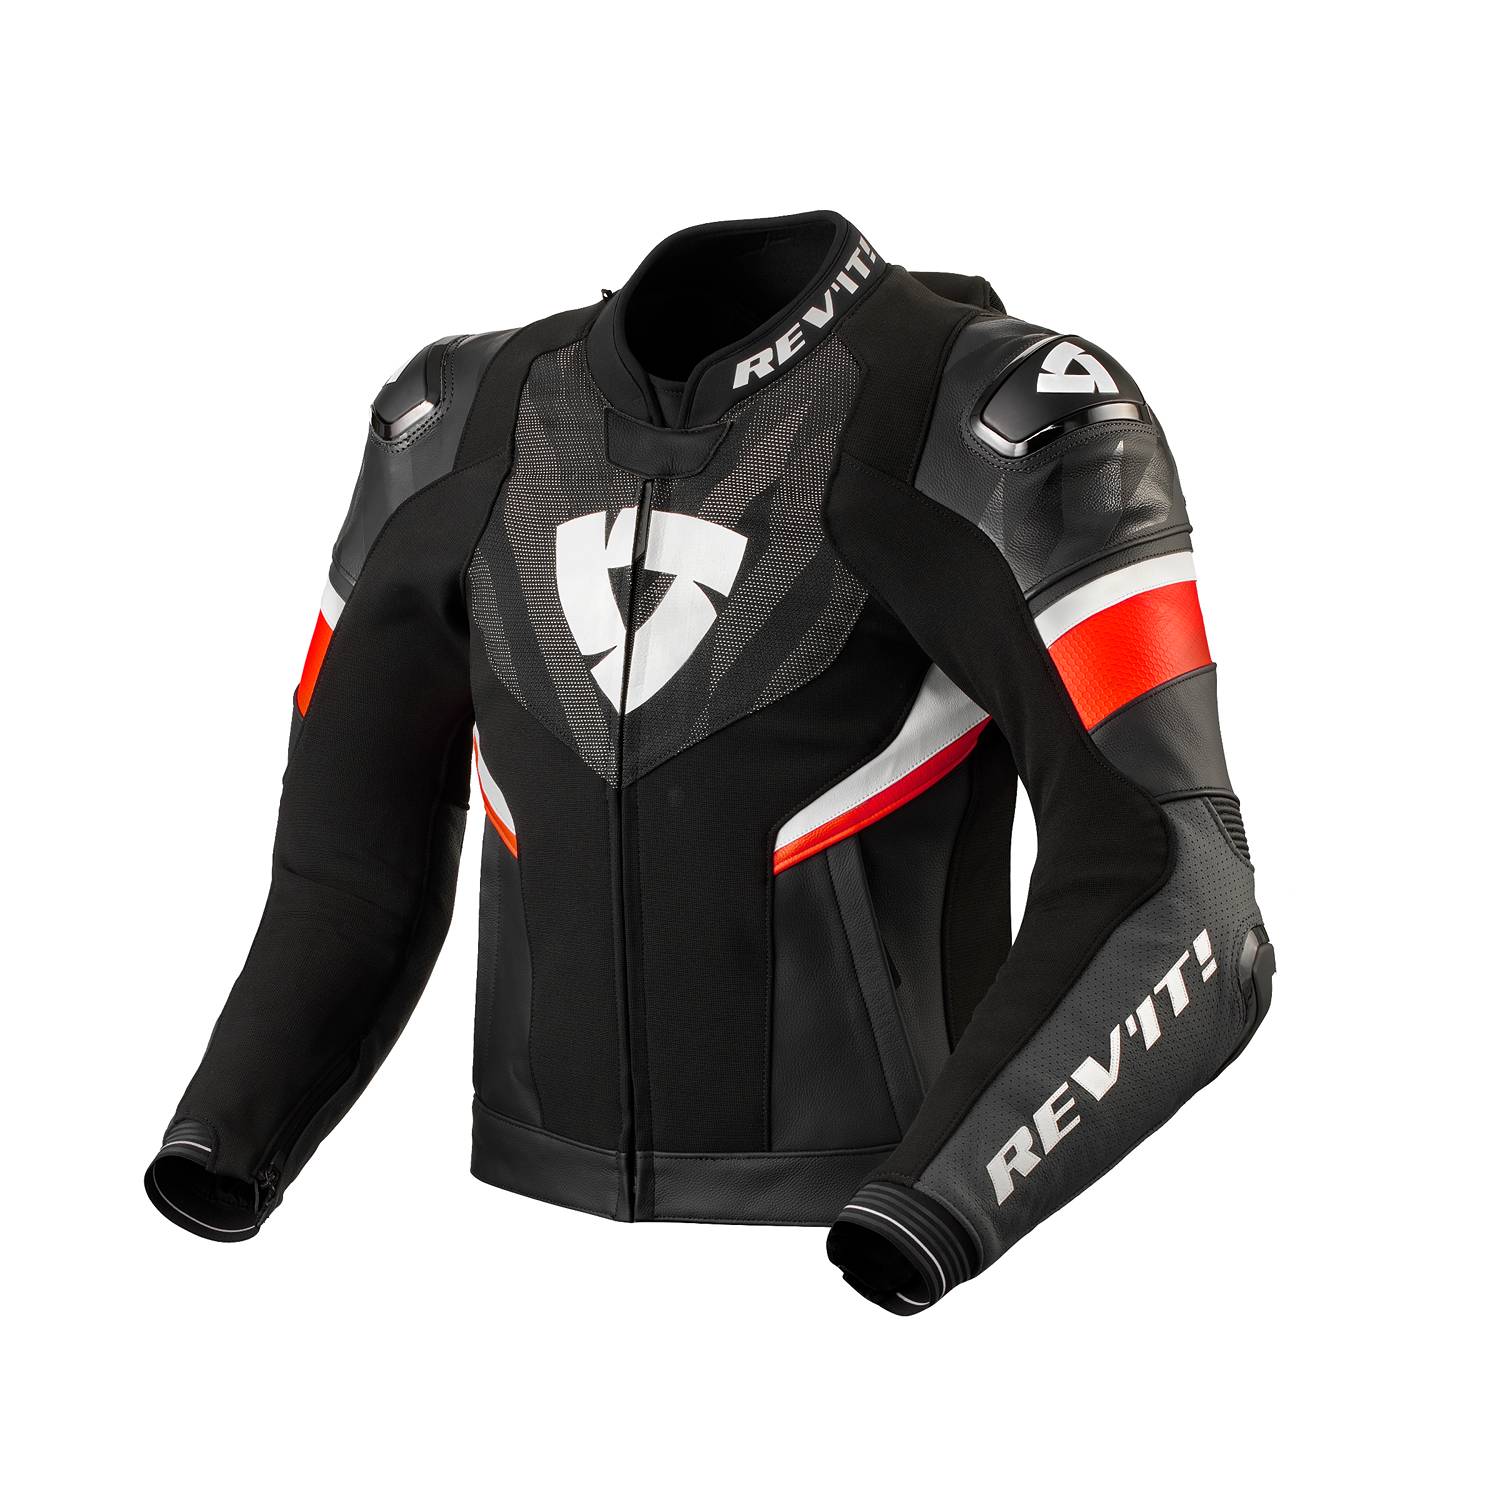 Image of REV'IT! Hyperspeed 2 Pro Jacket Black Neon Red Size 48 EN